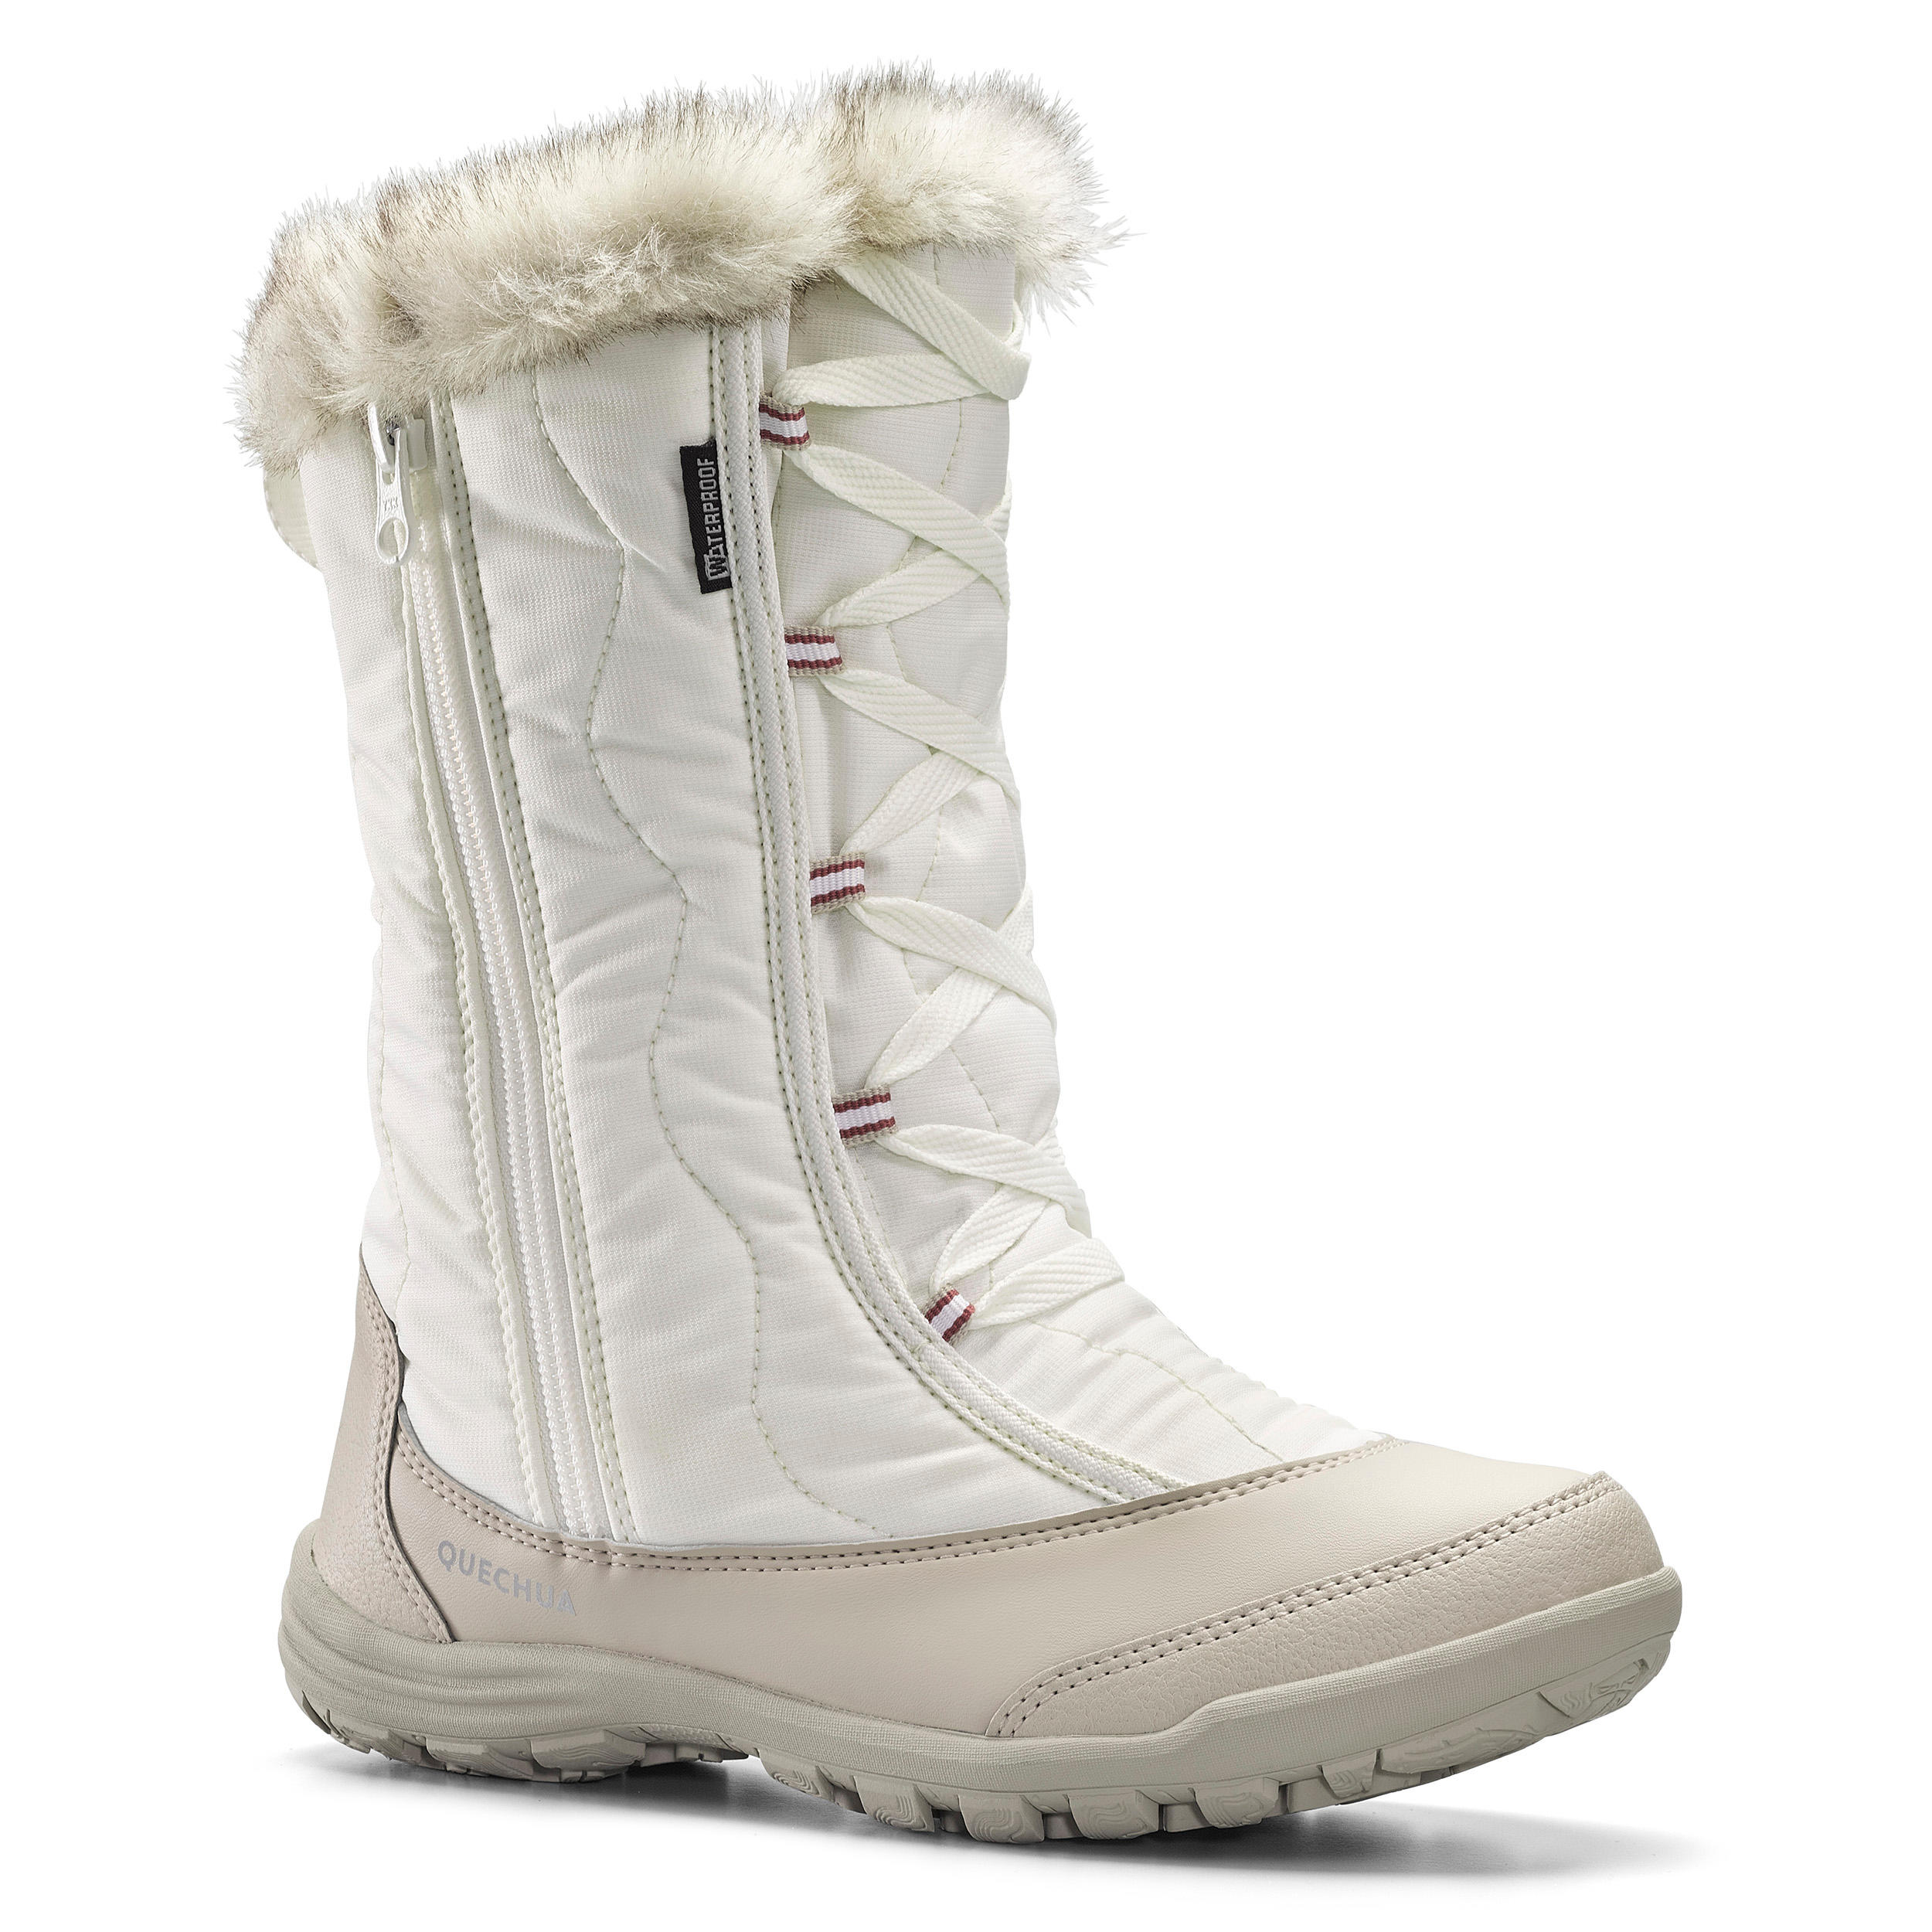 QUECHUA Kids’ Warm Waterproof Hiking Snow Boots SH500 X-Warm Zip Sizes 11.5 - 5.5